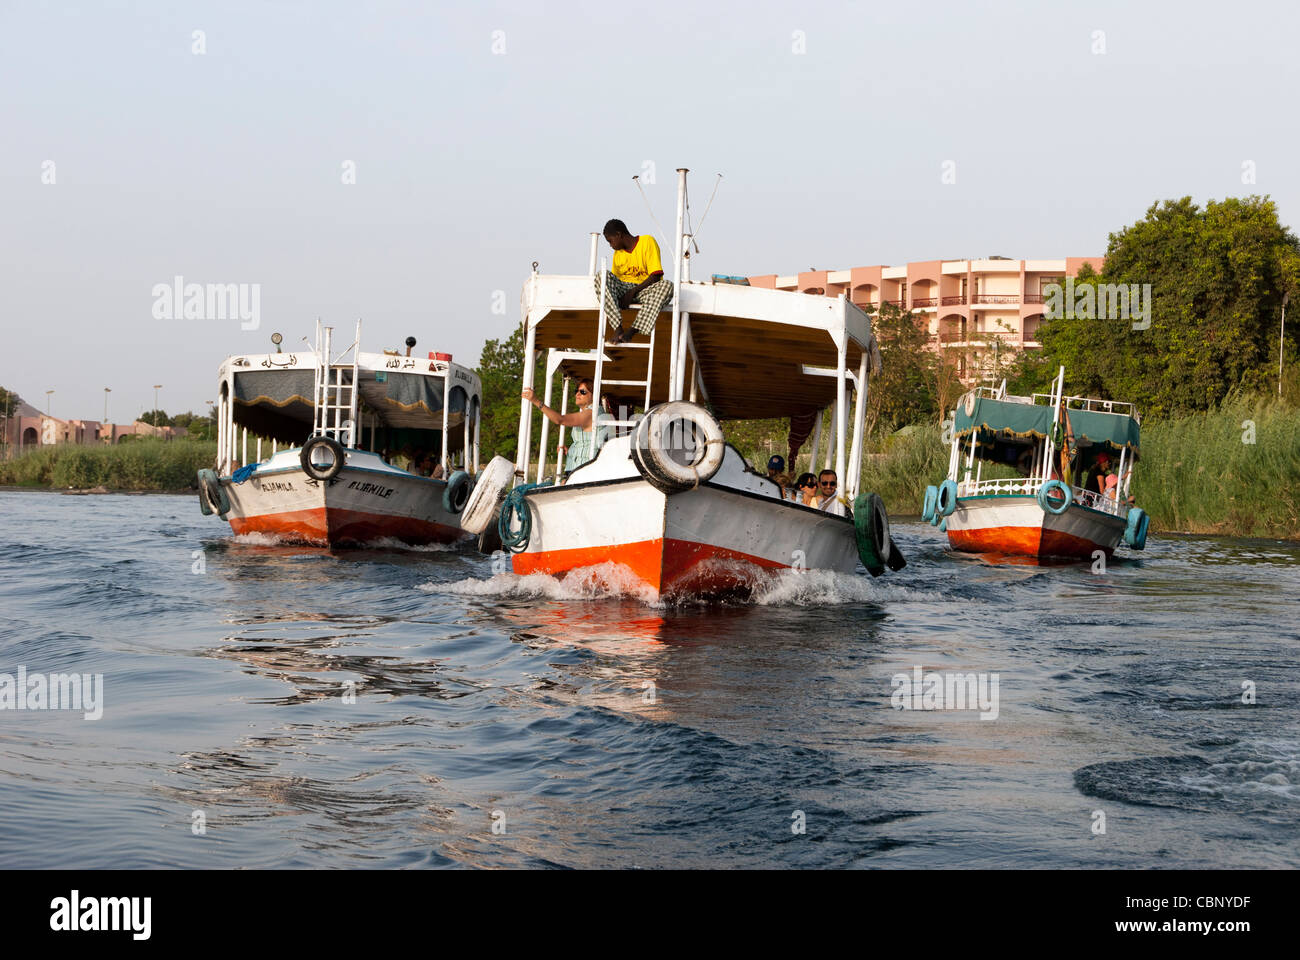 Boote mit Touristen auf dem Nil Fluss - Assuan, Oberägypten Stockfoto